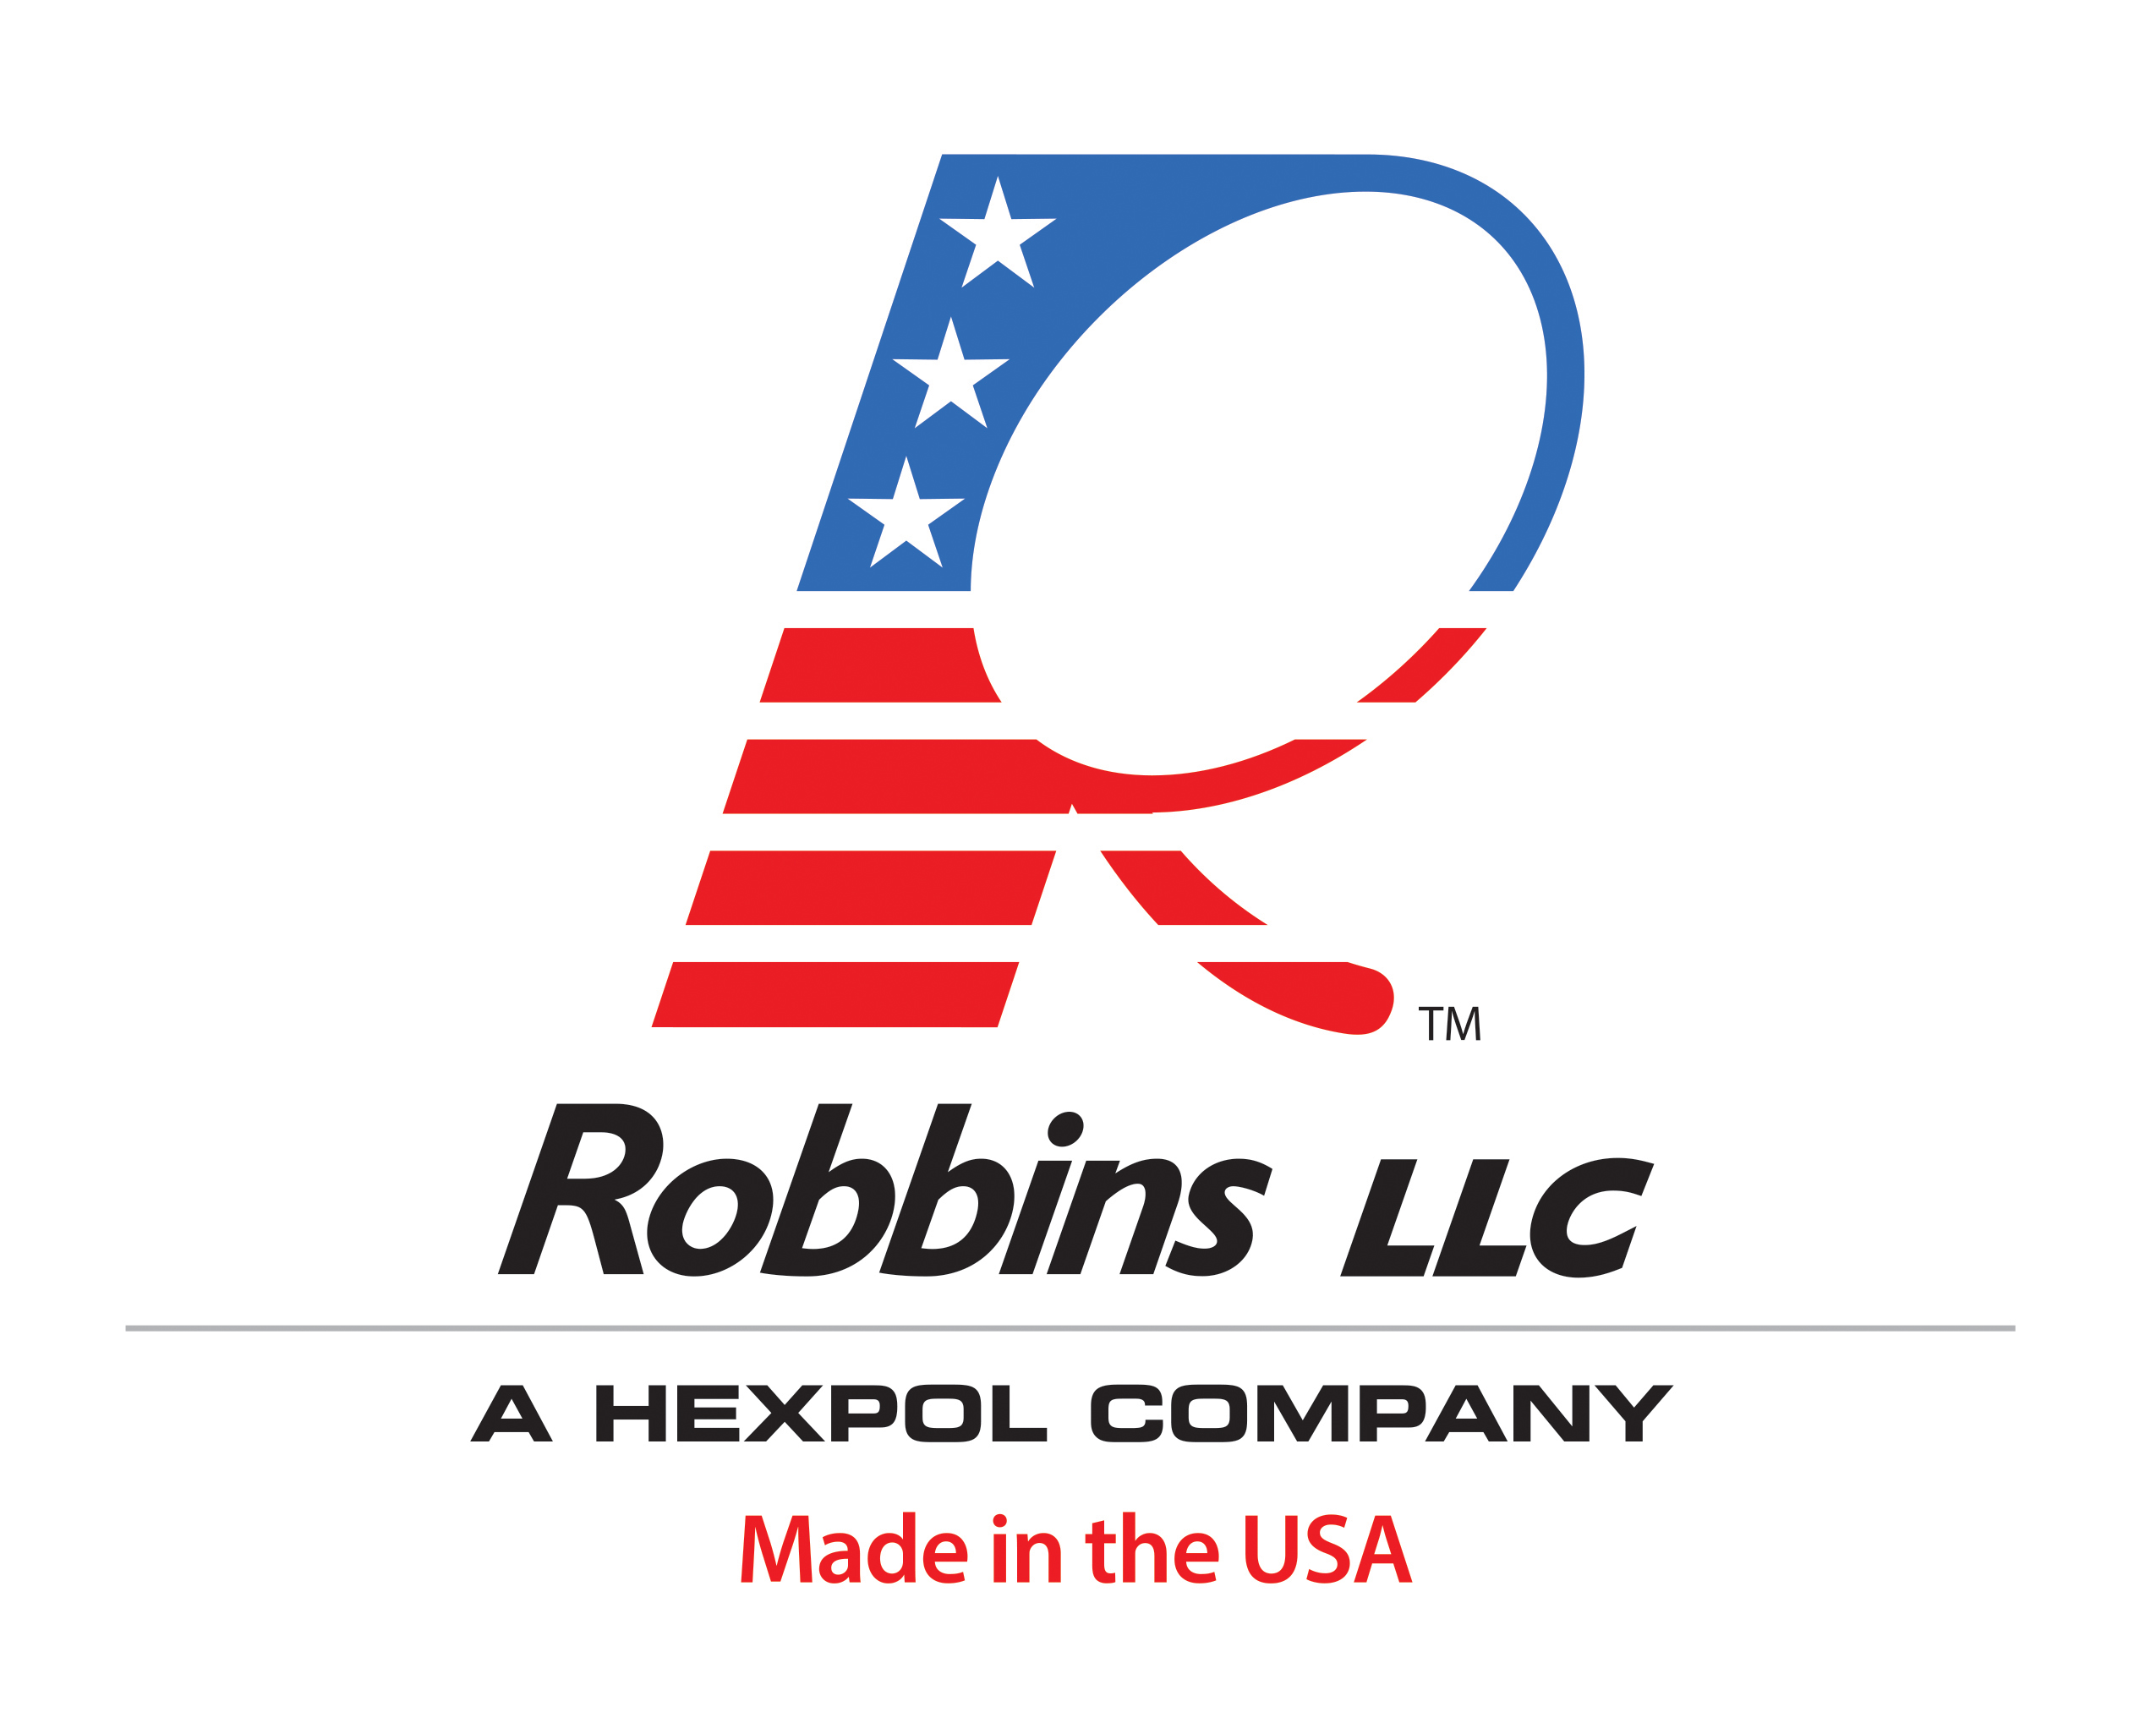 Robbins Website